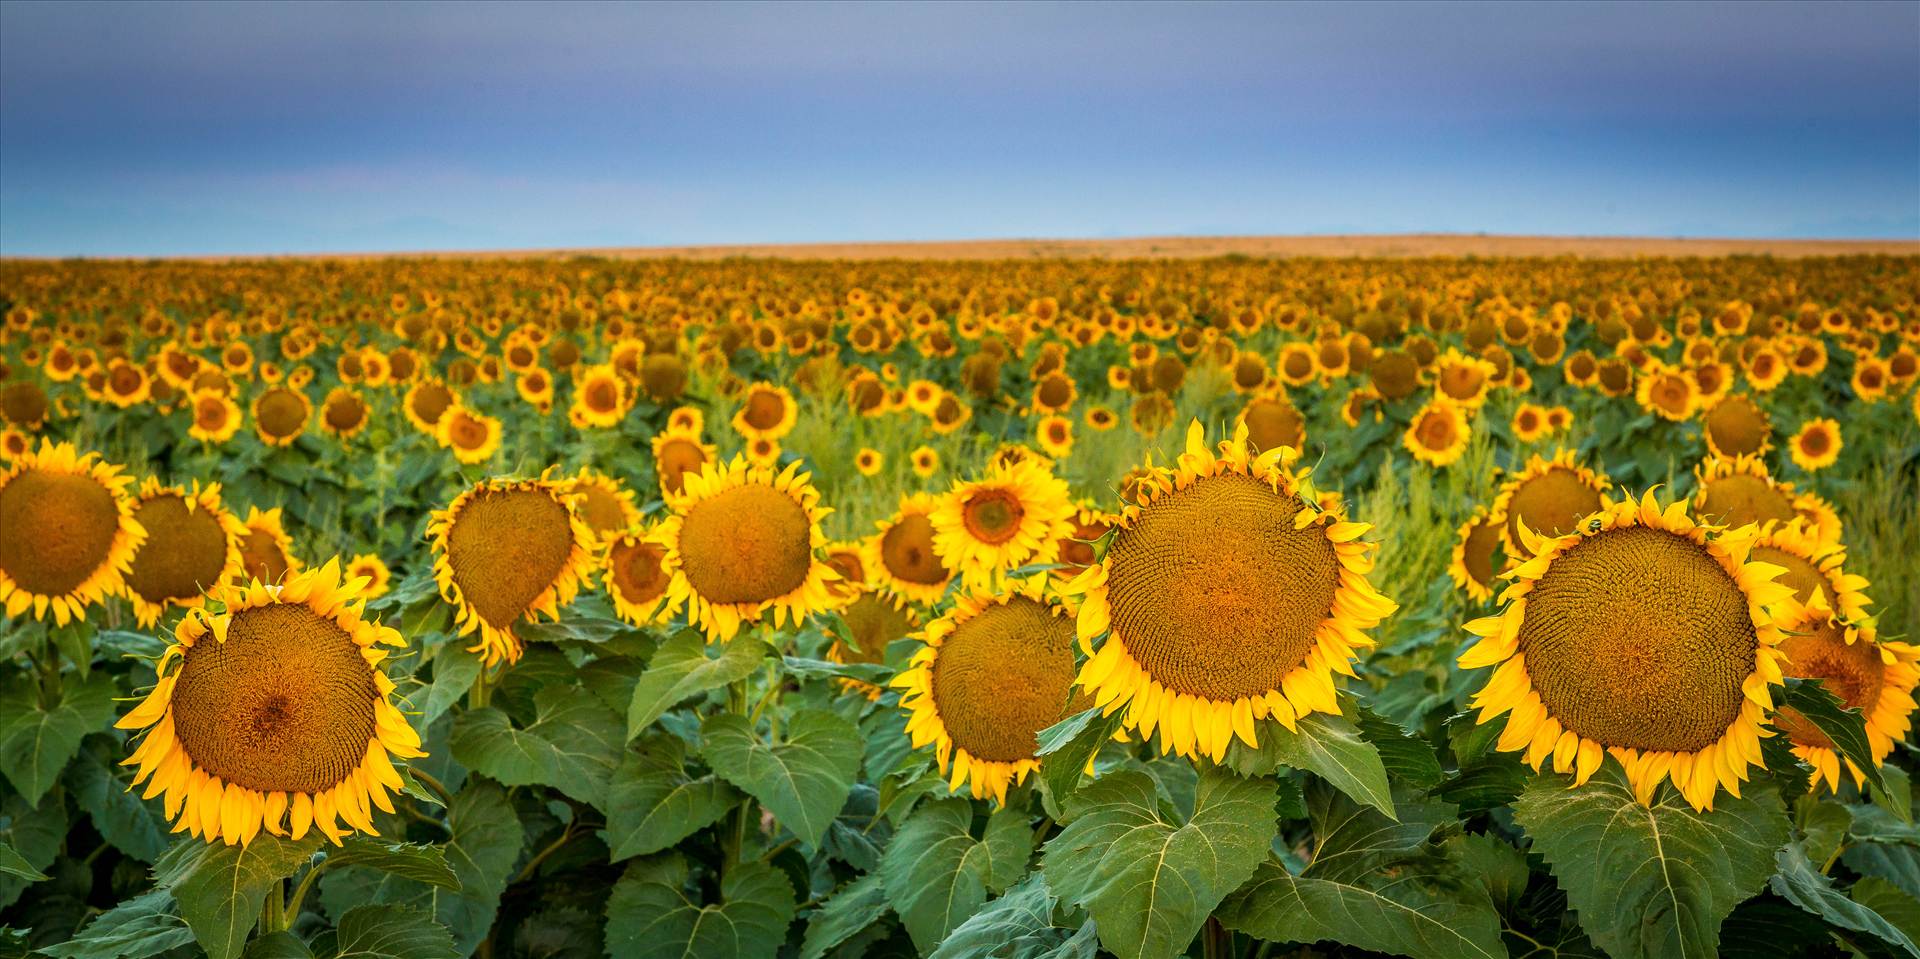 Sunflower Sunrise IV - Sunflower fields near Denver International Airport, Colorado. by Scott Smith Photos